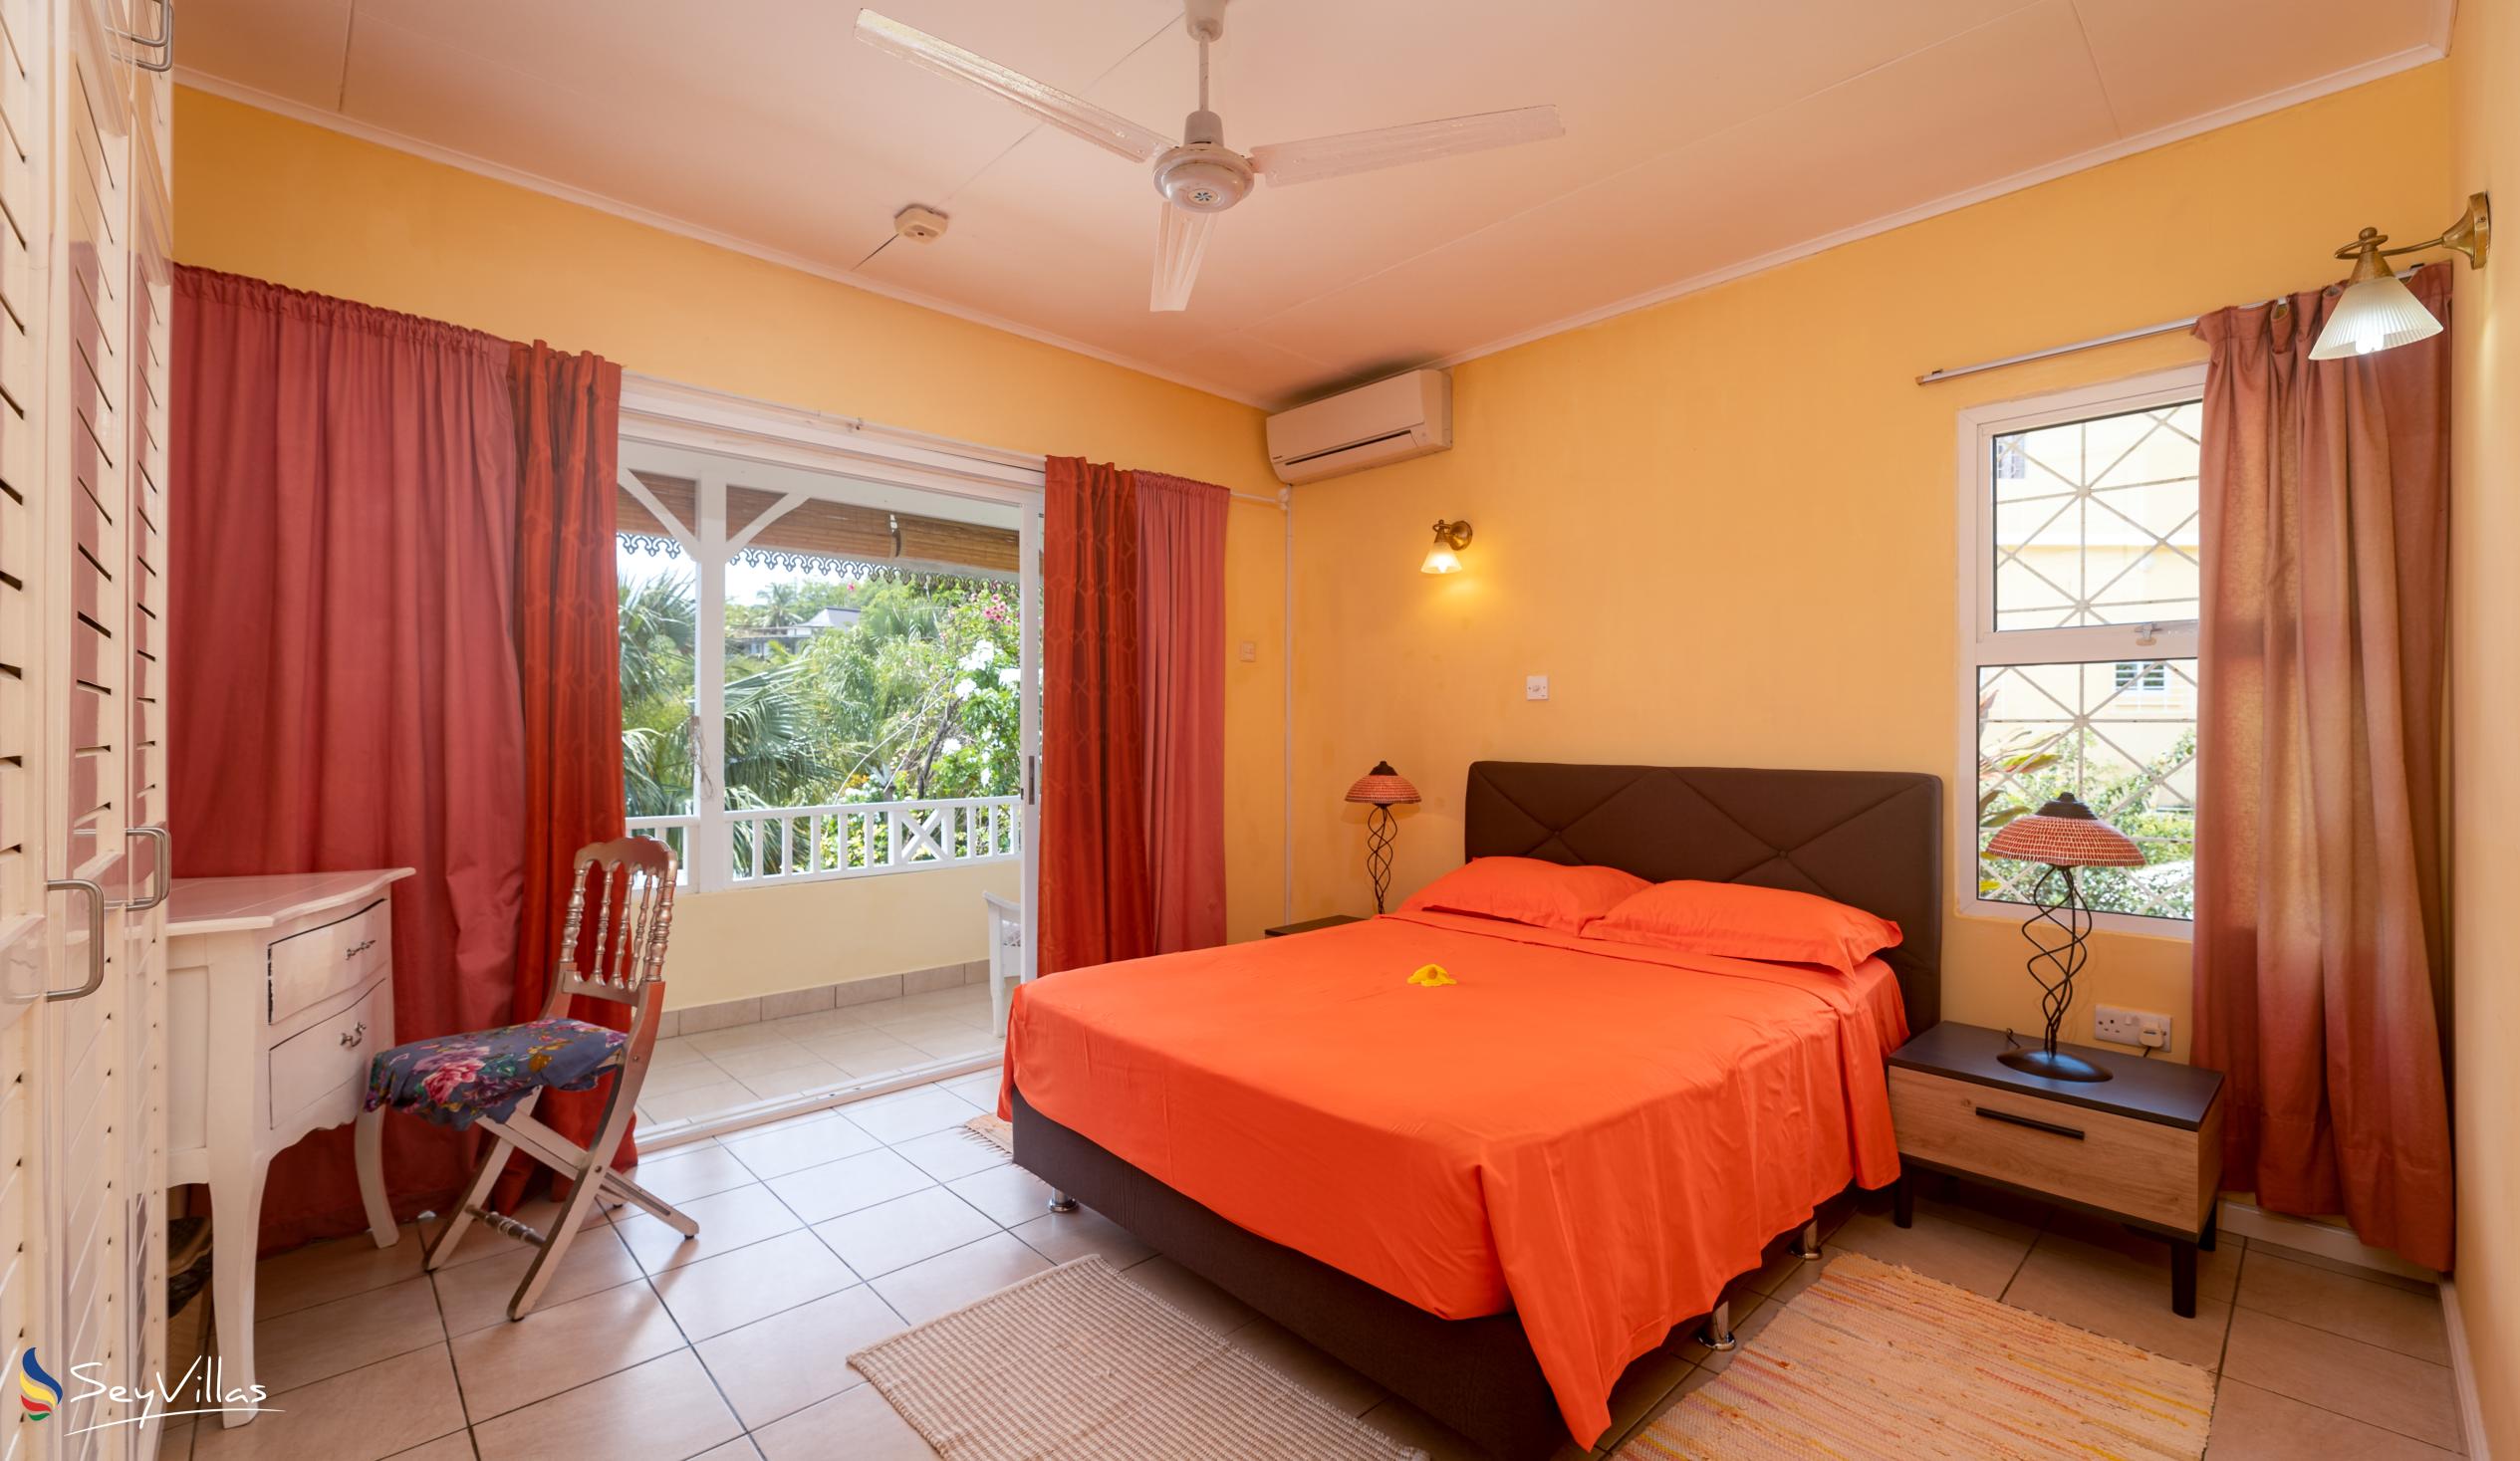 Photo 76: Residence Monte Cristo - 3-Bedroom Duplex - Mahé (Seychelles)